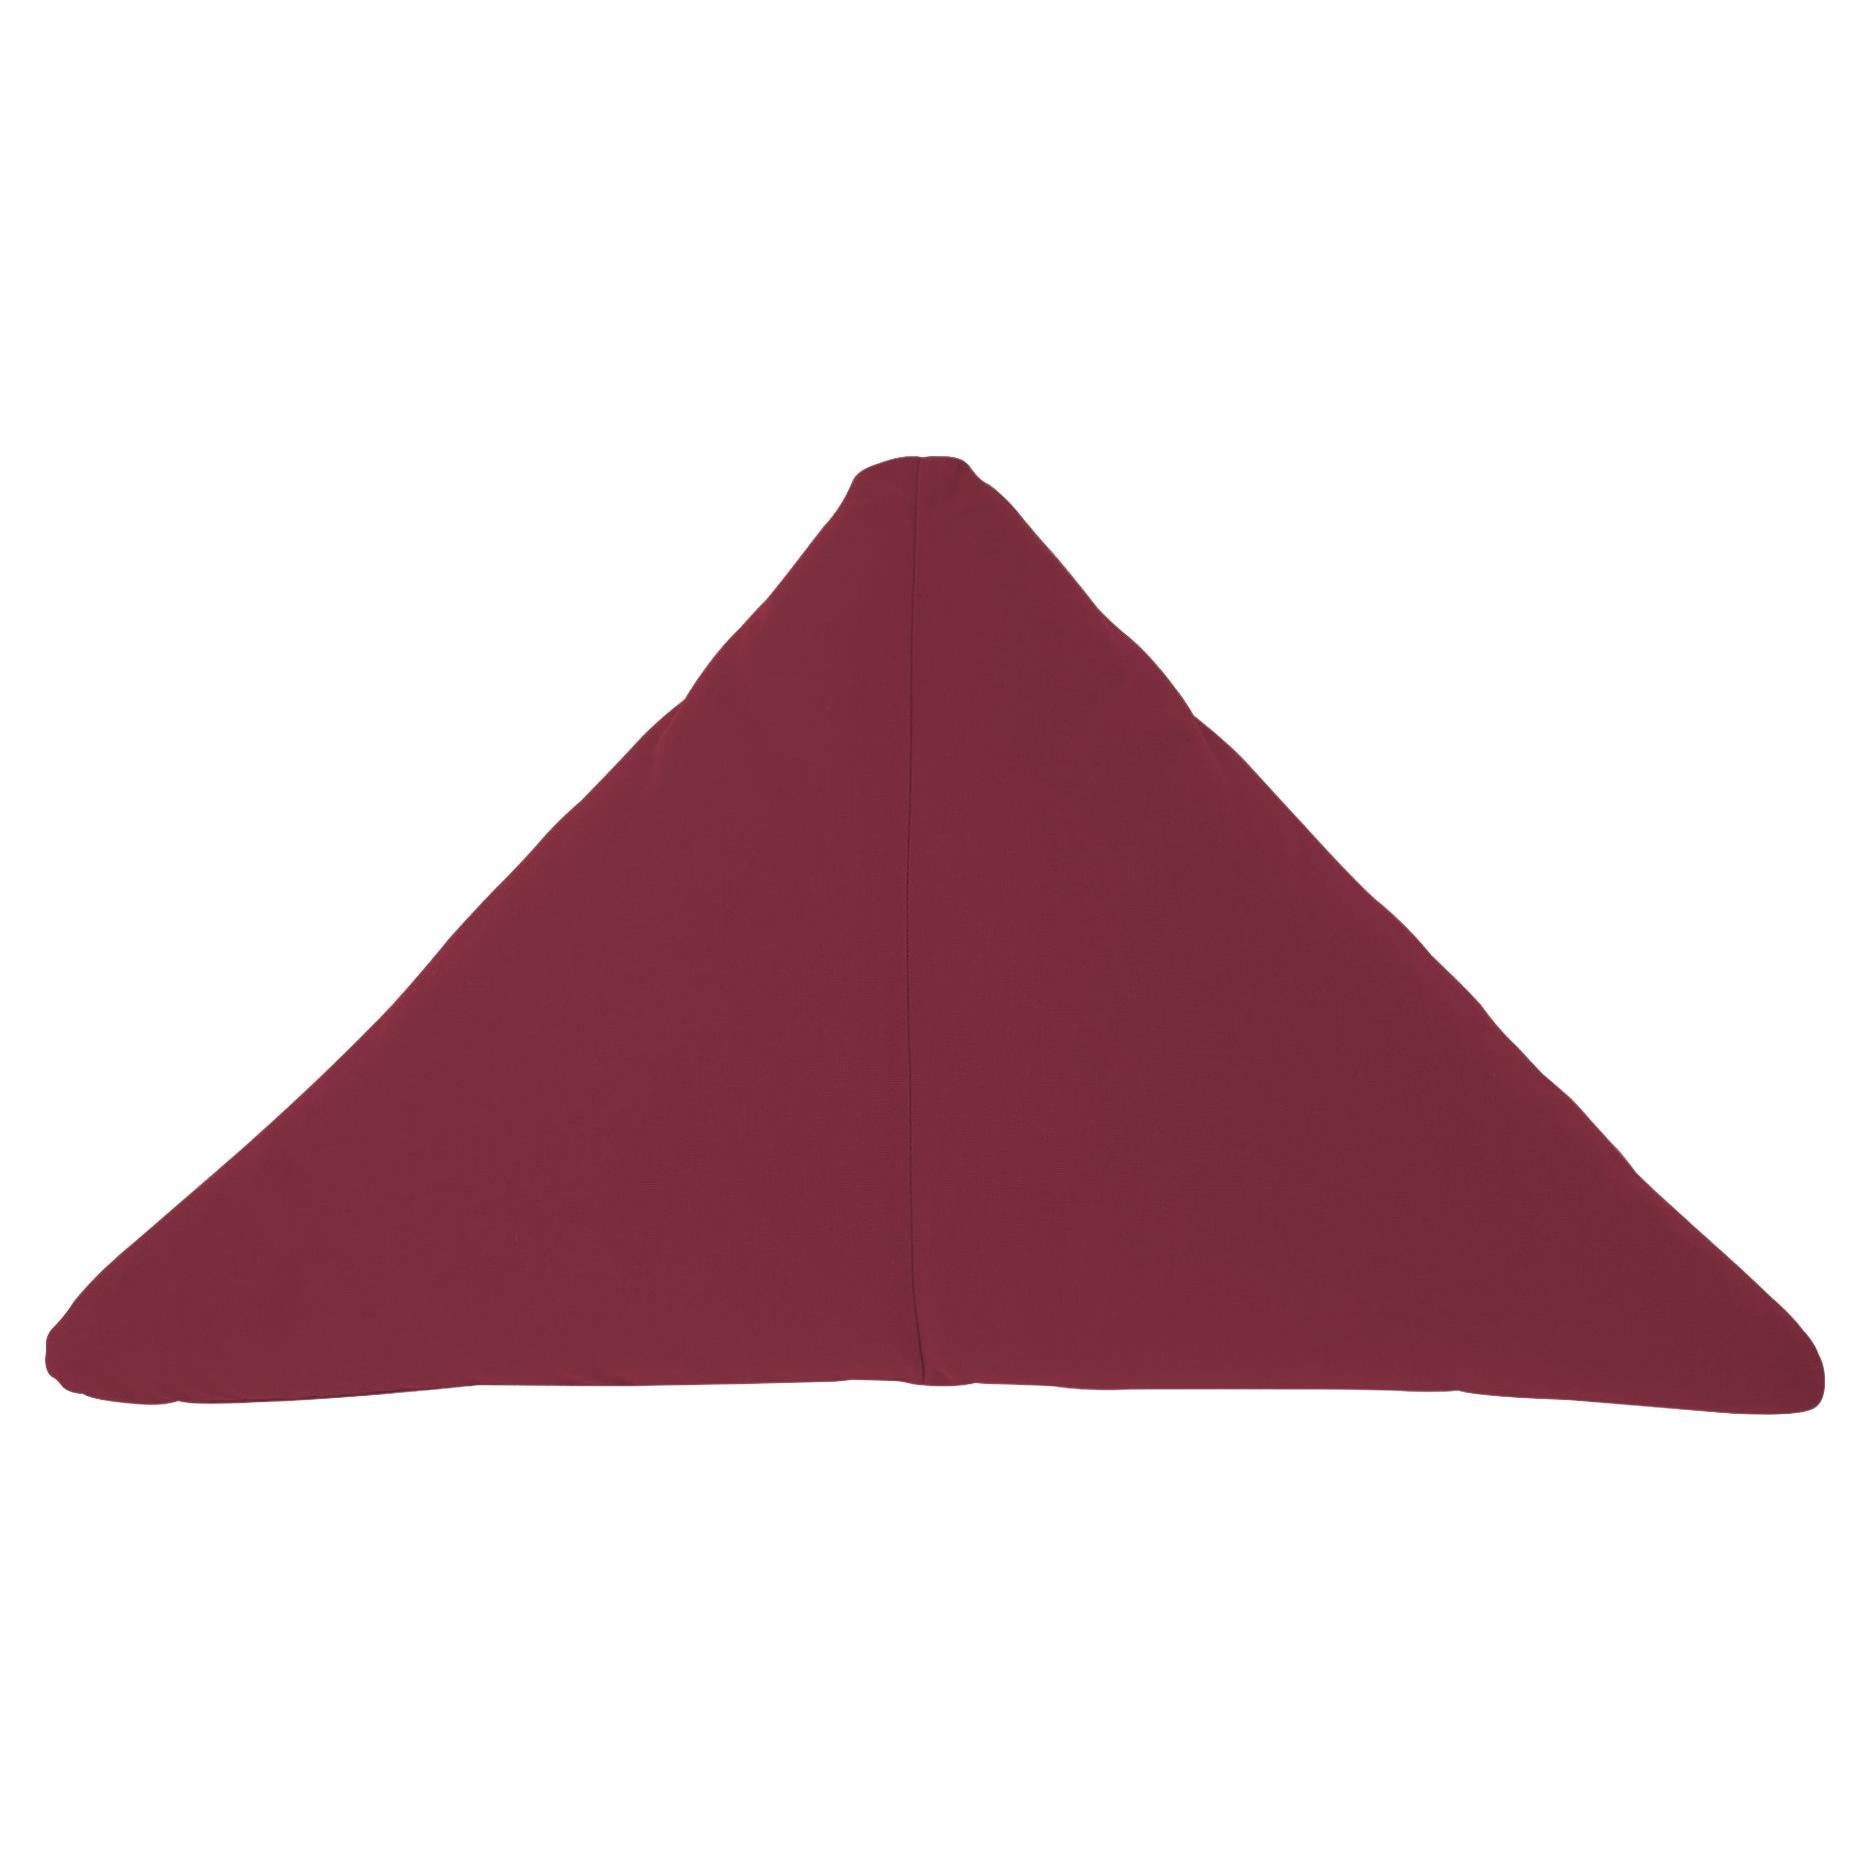 Contemporary Bend Goods - Triangle Throw Pillow in Granite Sunbrella For Sale